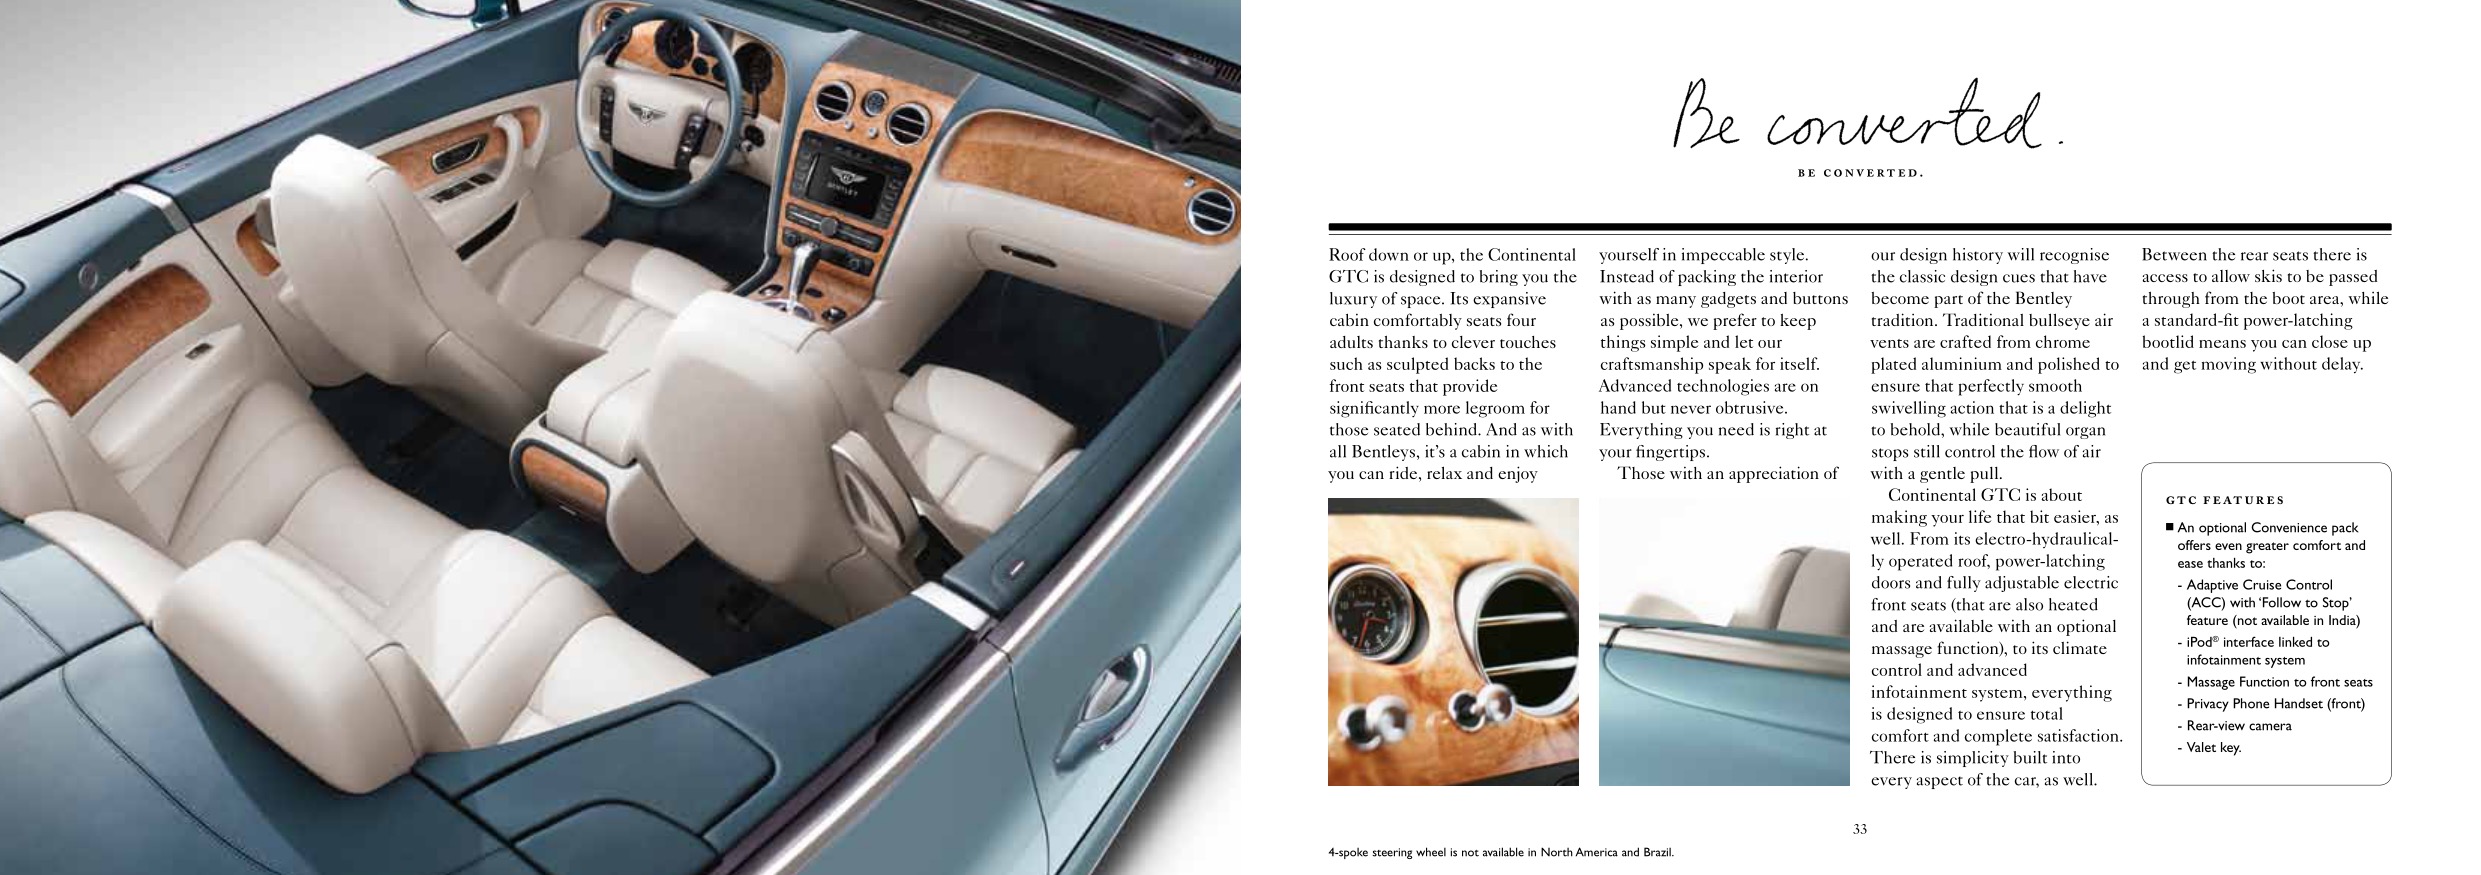 2011 Bentley Continental GTC Brochure Page 39